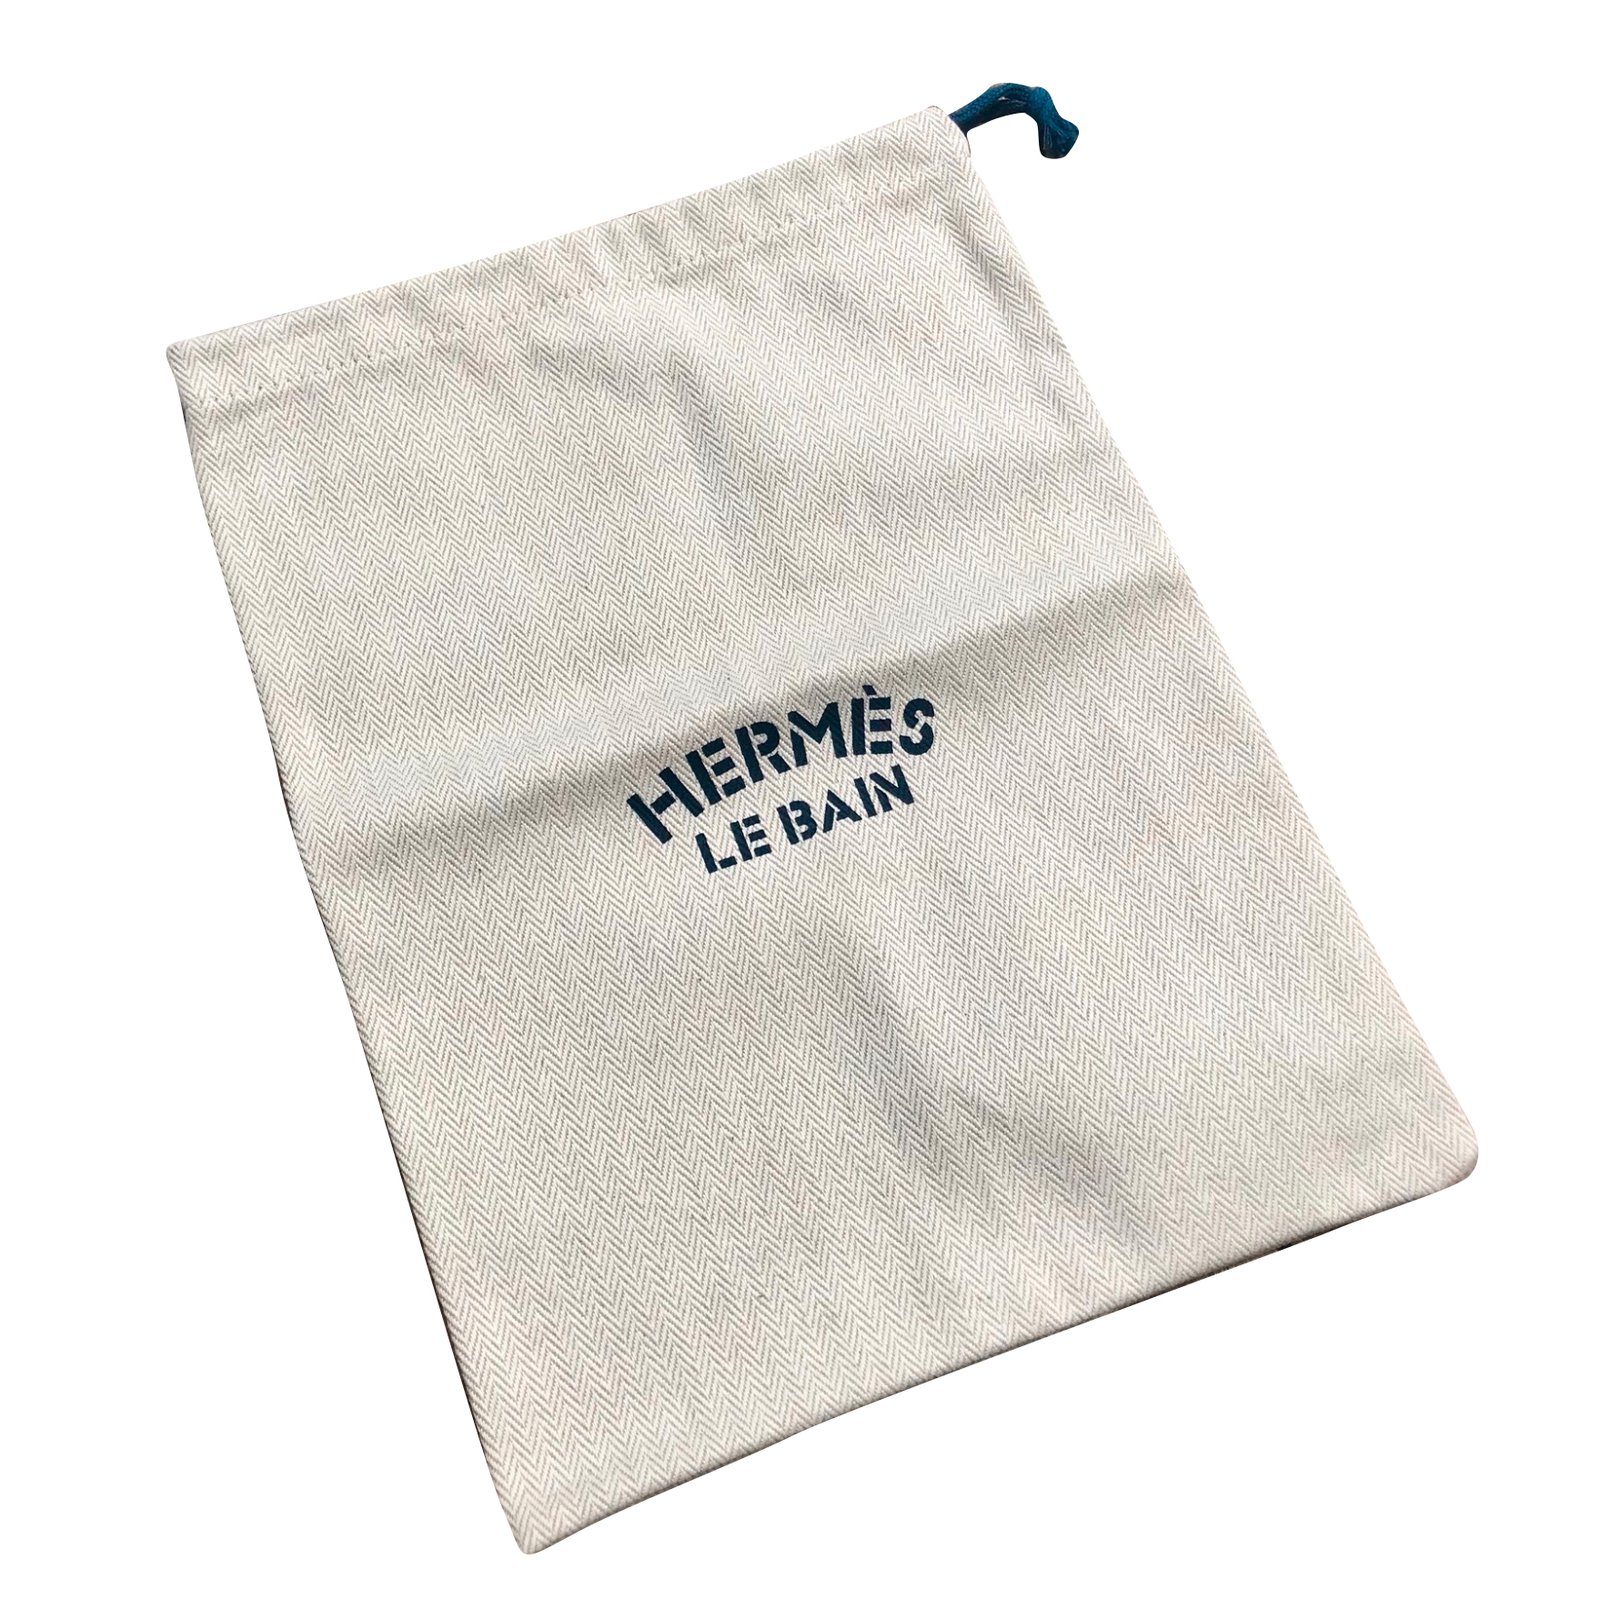 Hermès Travel bag Travel bag Cotton 